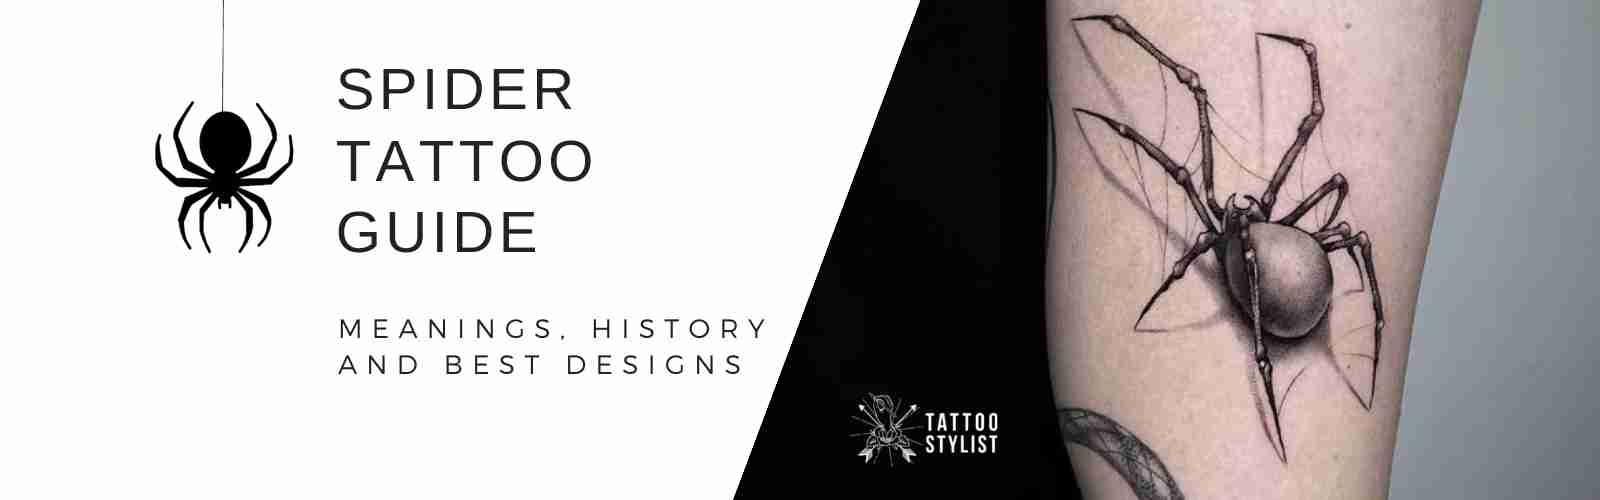 Premium Vector | Tribal spider head logo tattoo design stencil vector  illustration